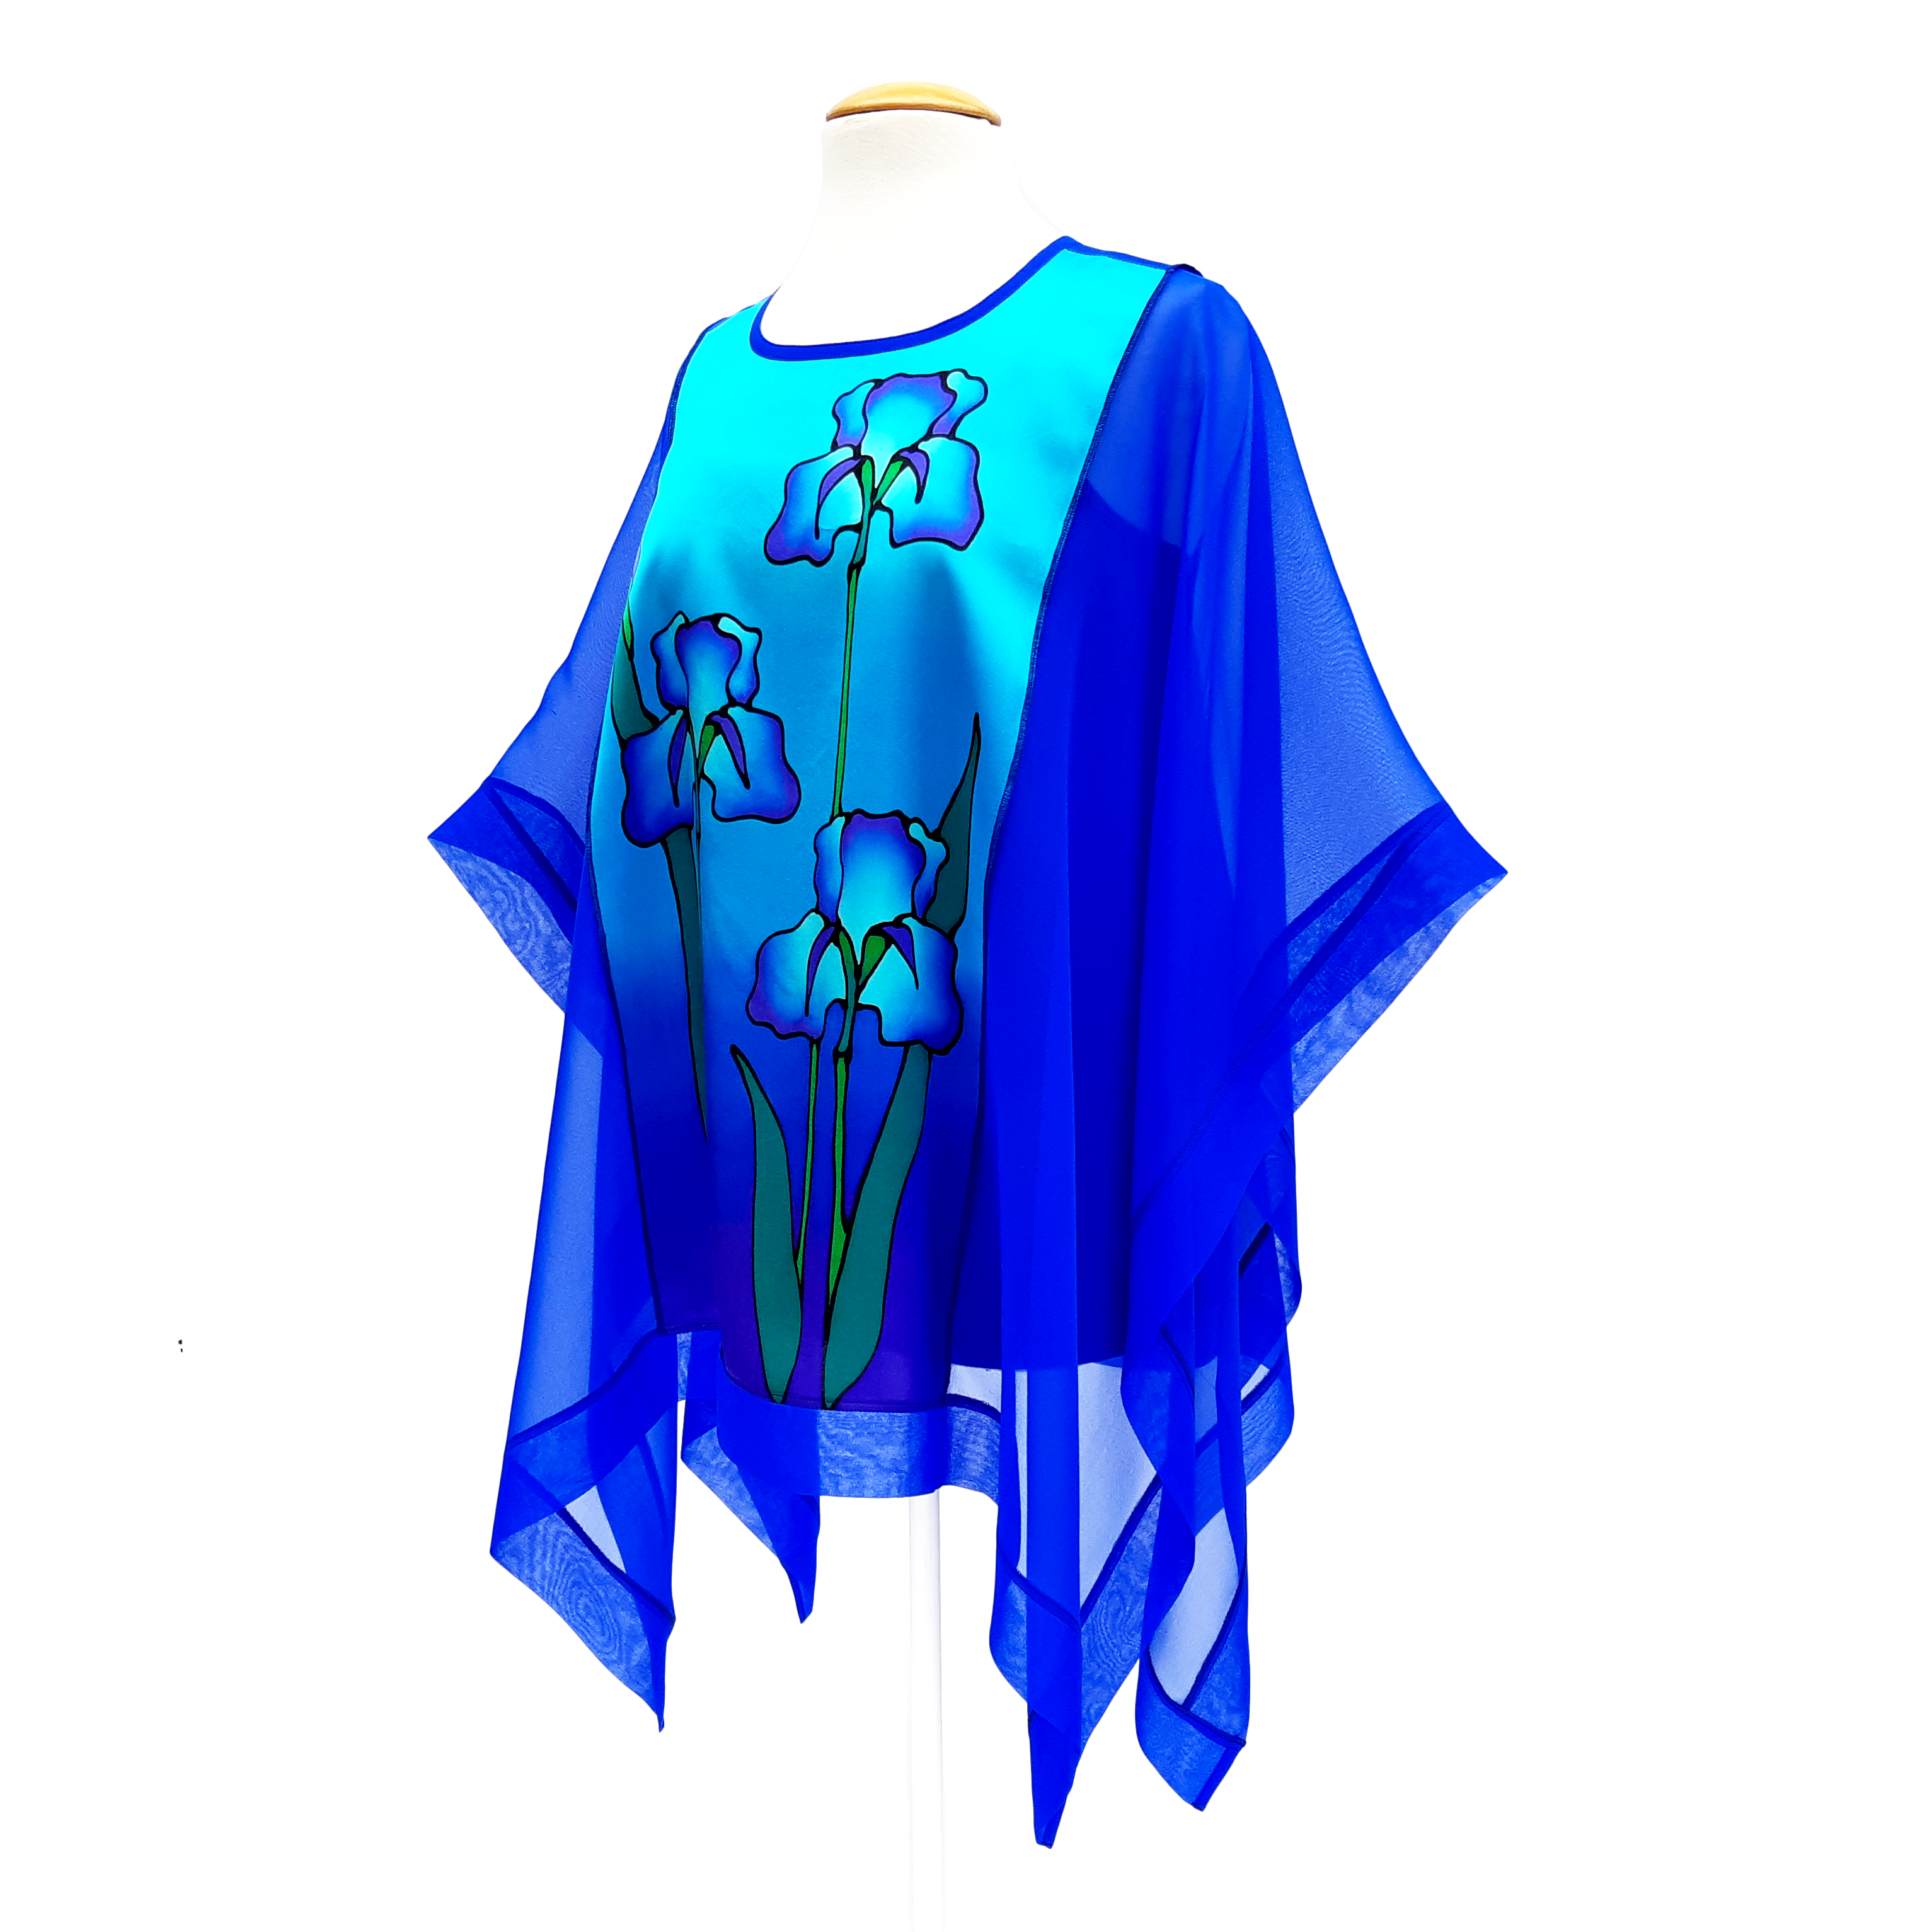 silk clothing for women blue iris art design one size made in Canada by Lynne Kiel